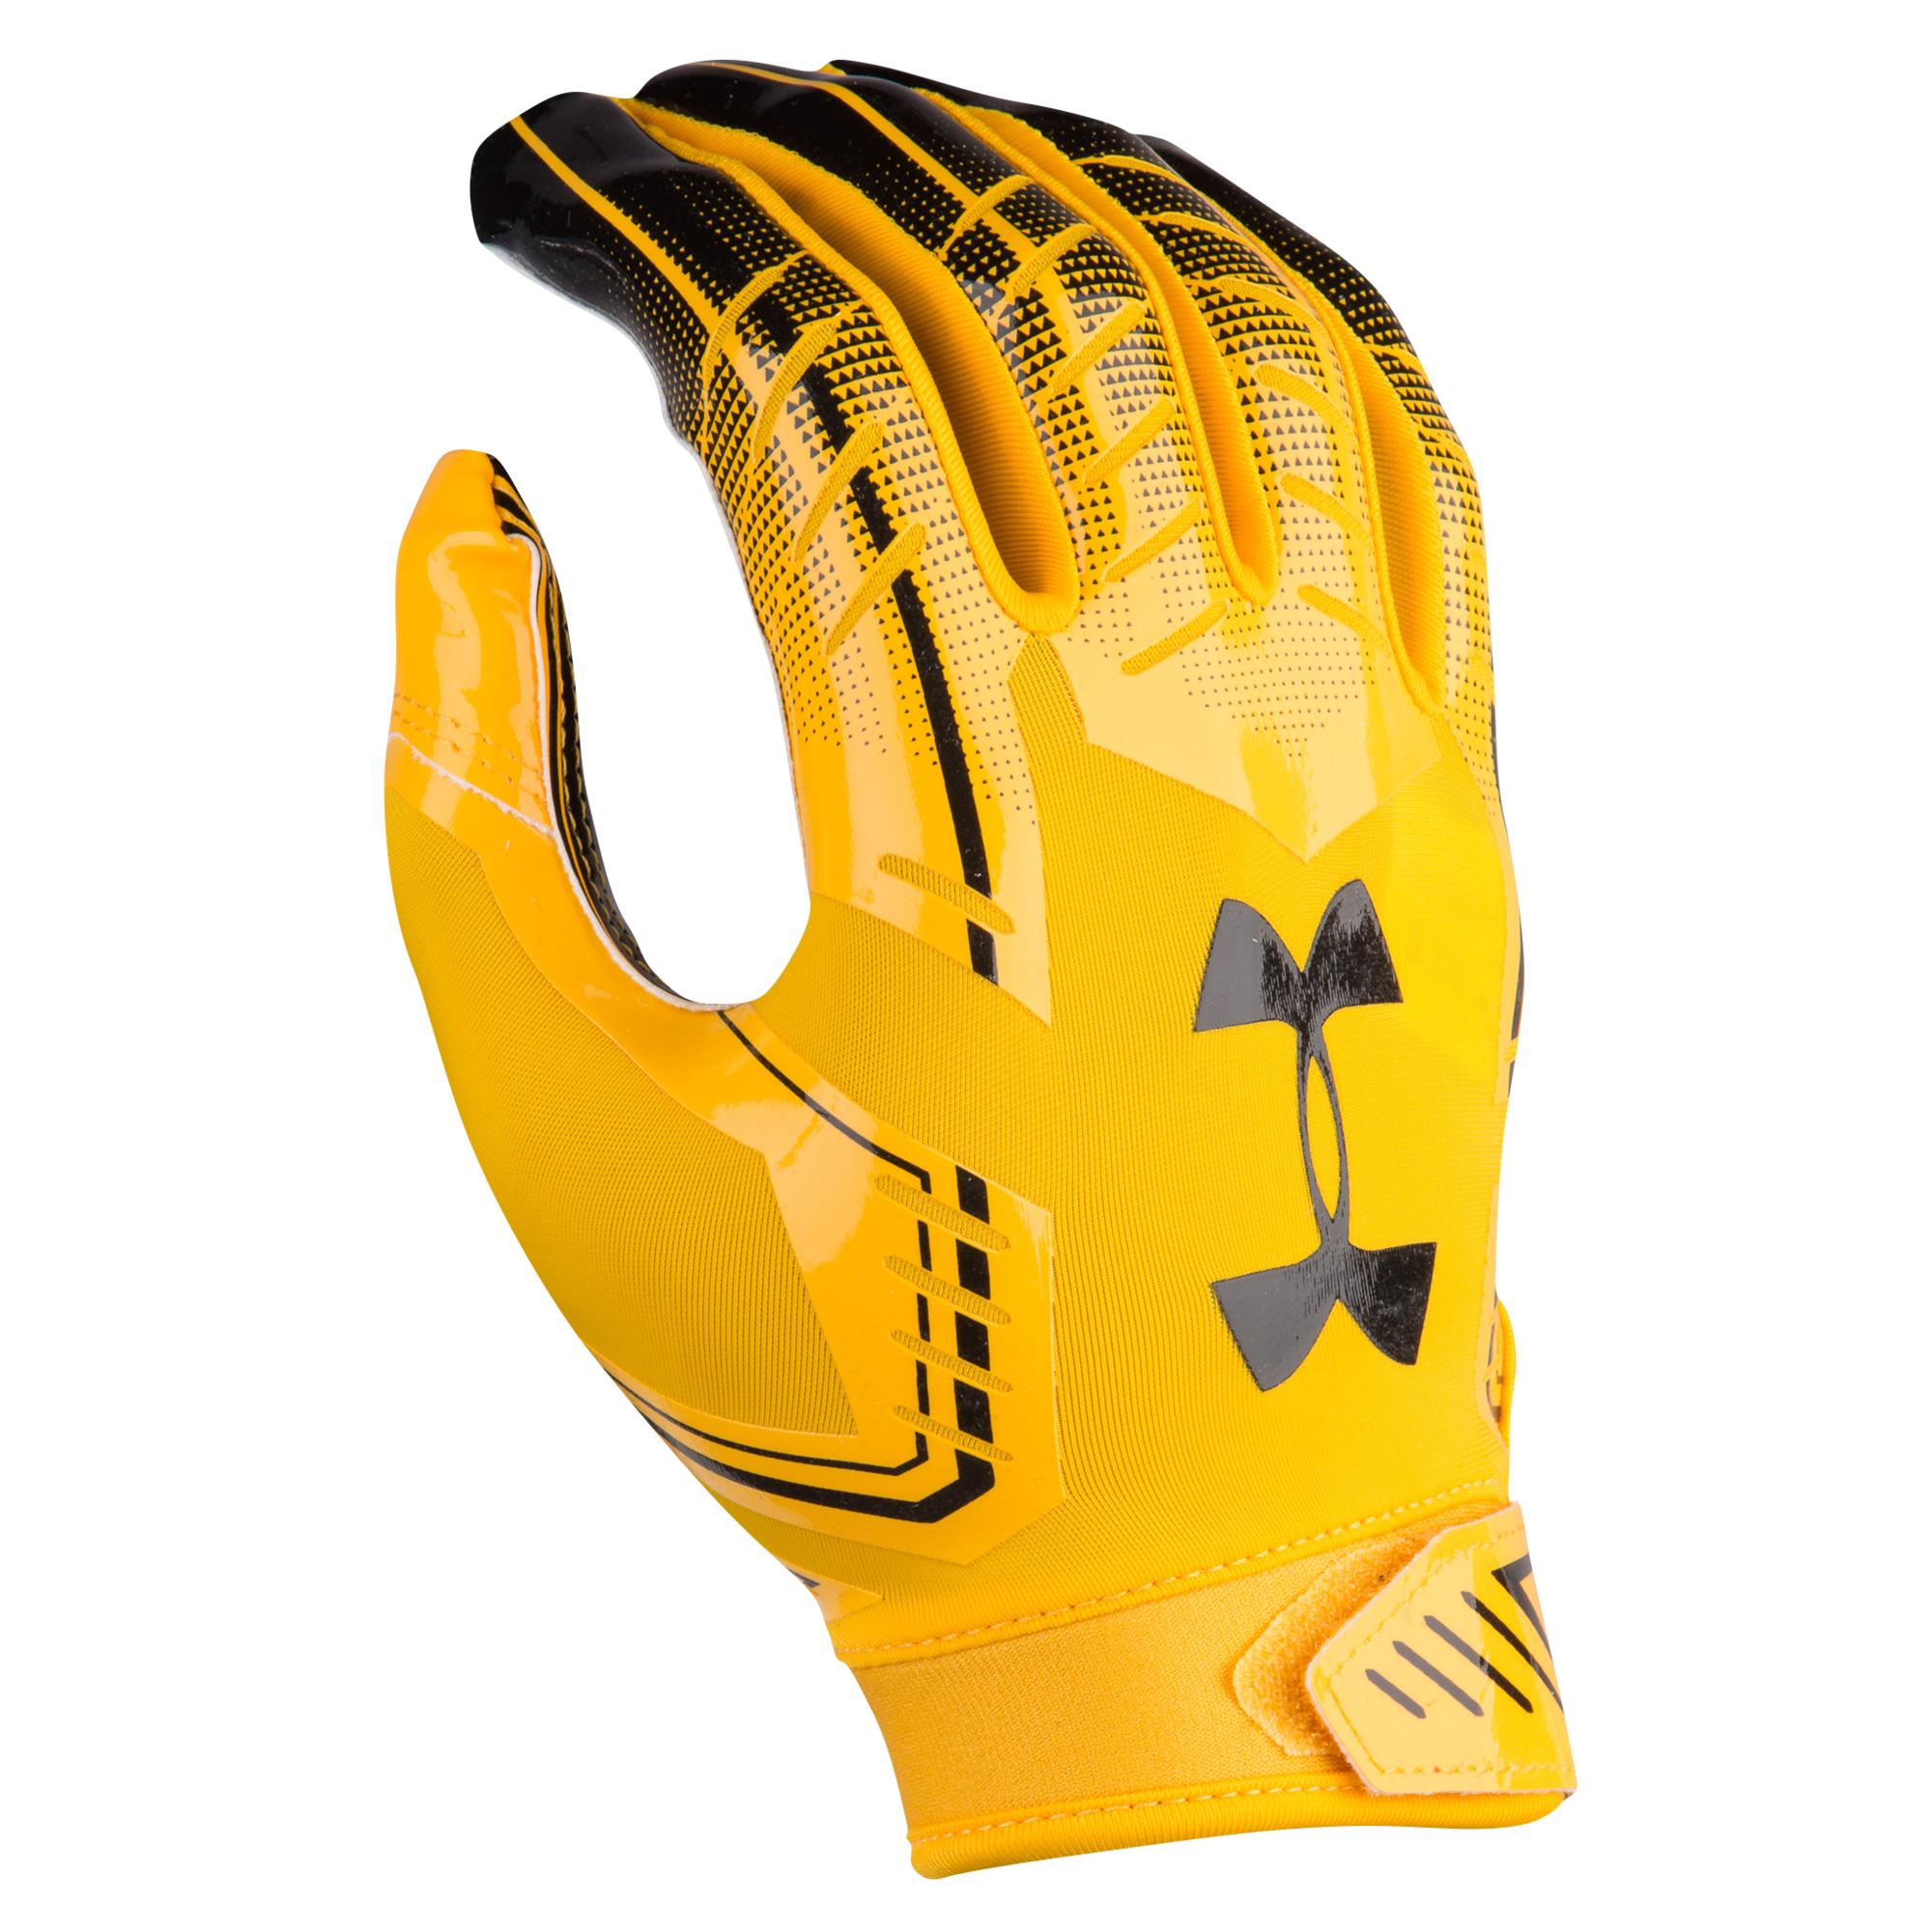 Eastbay Under Armour Football Gloves on Sale, SAVE 59%.